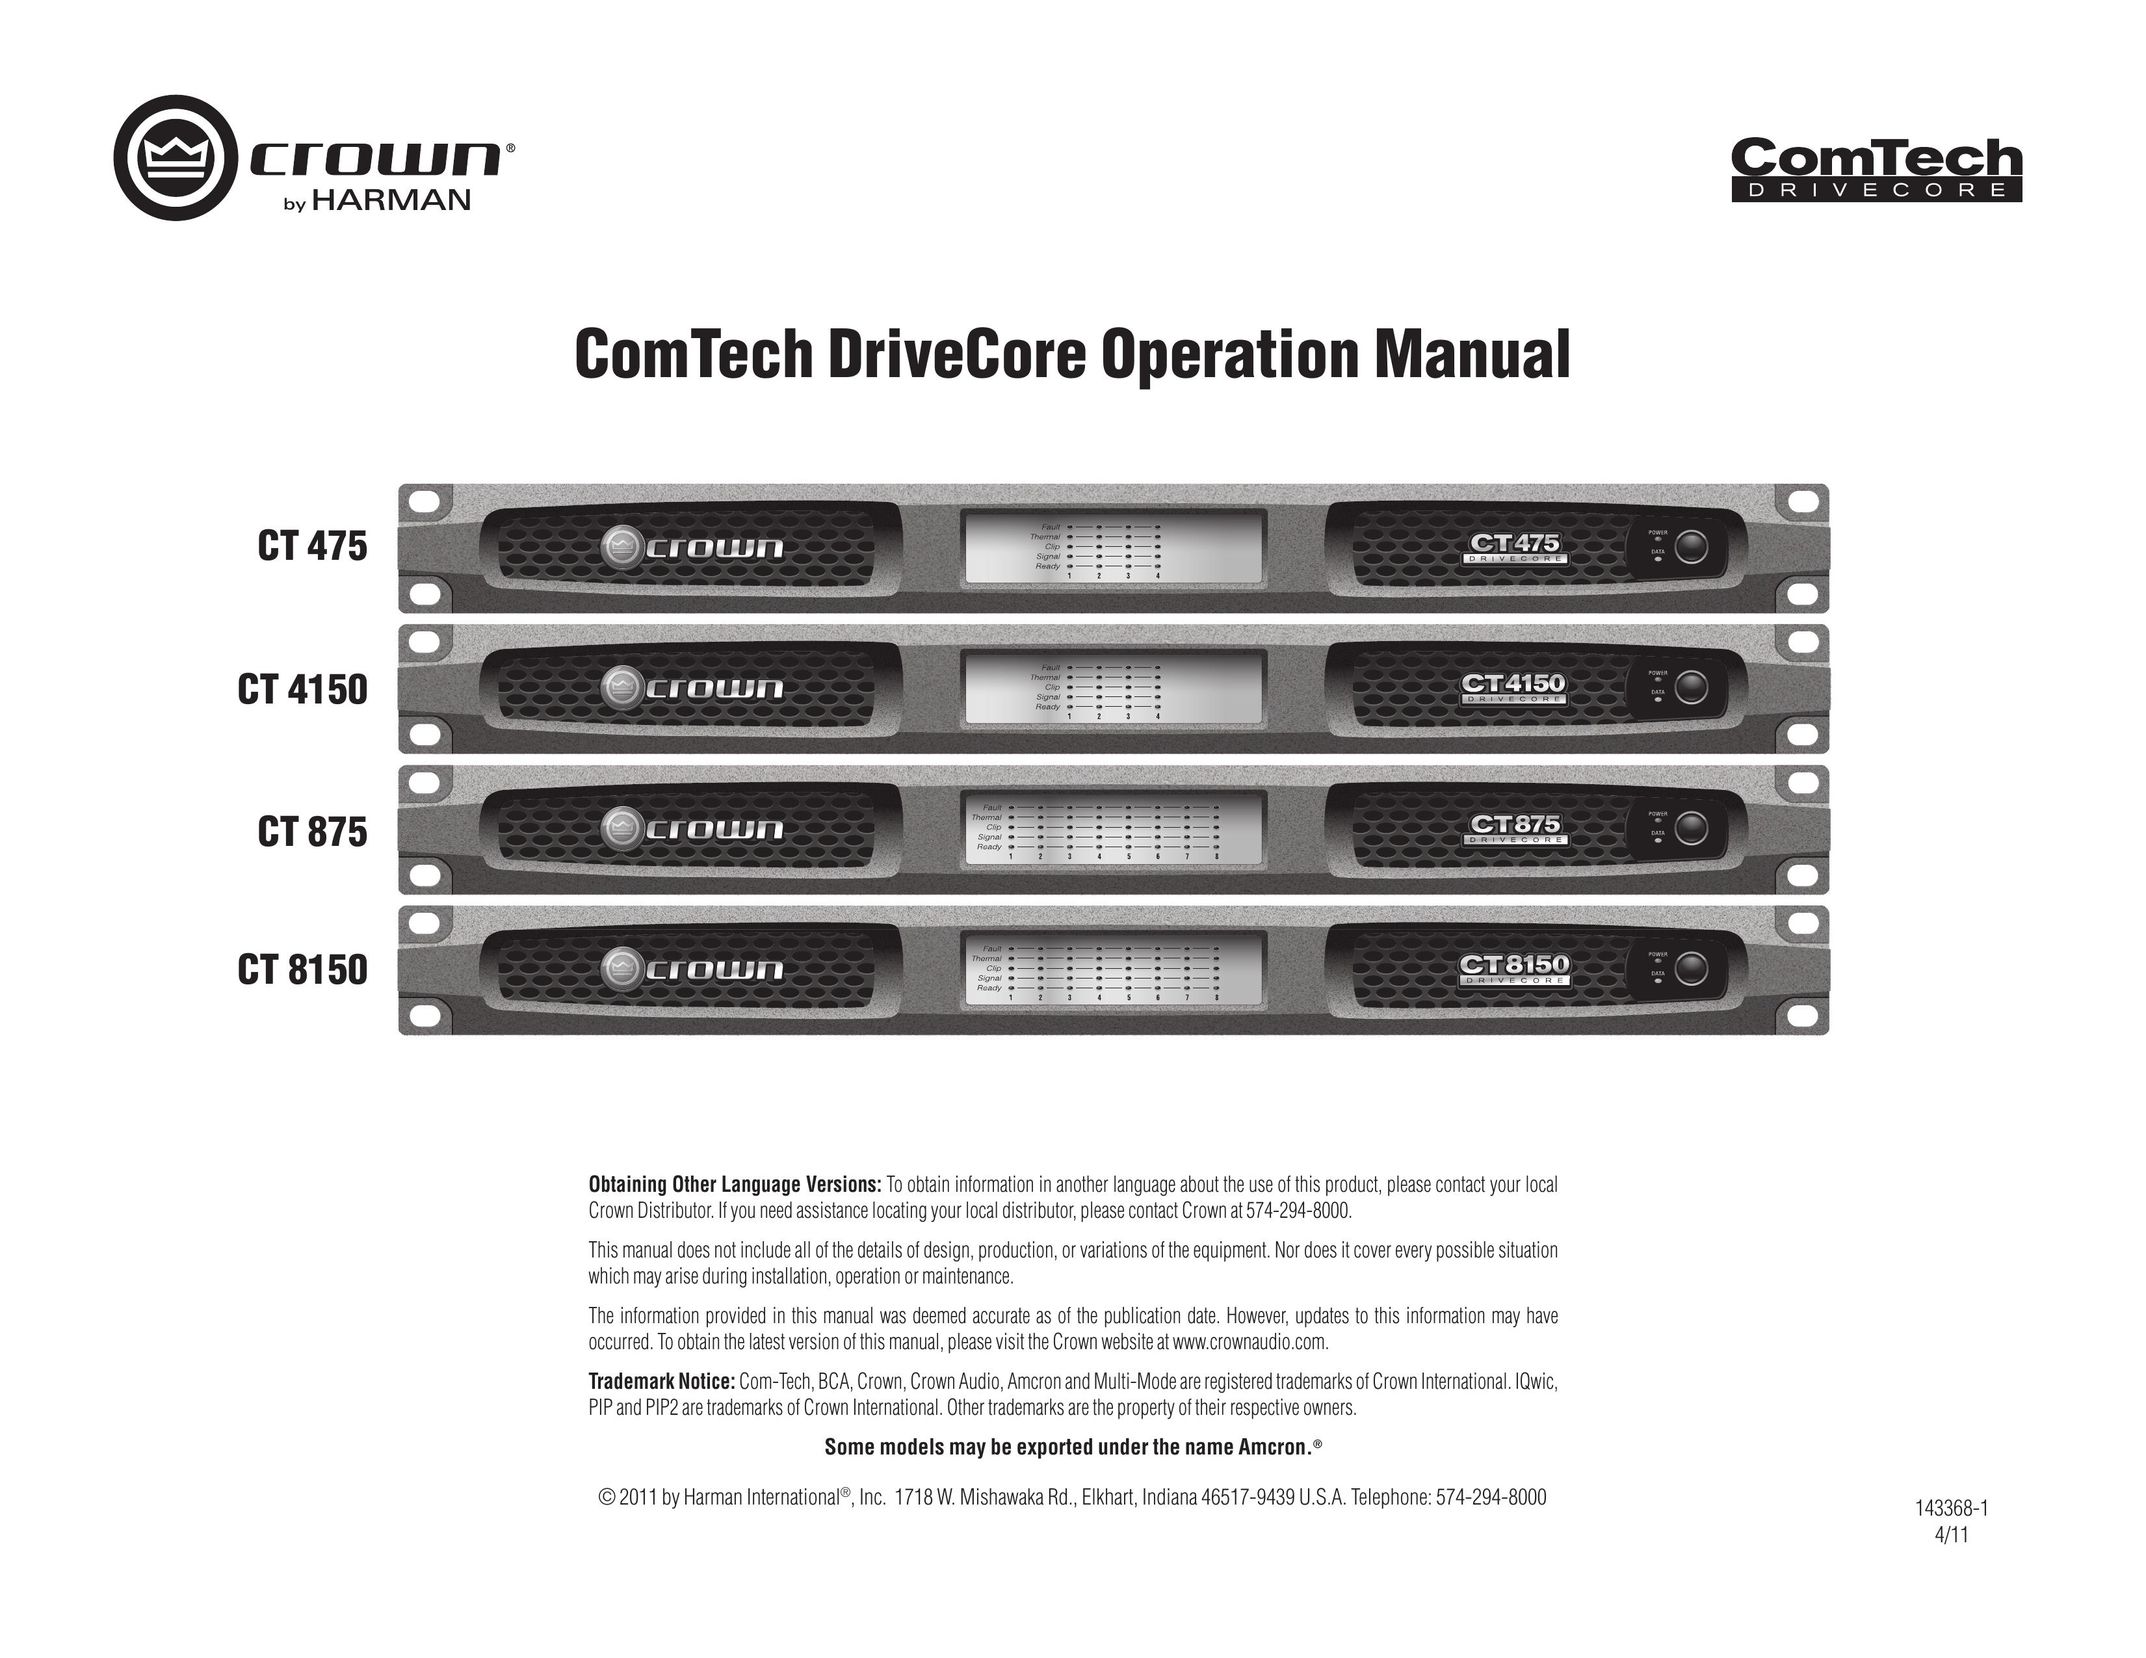 Crown CT 875 Computer Hardware User Manual